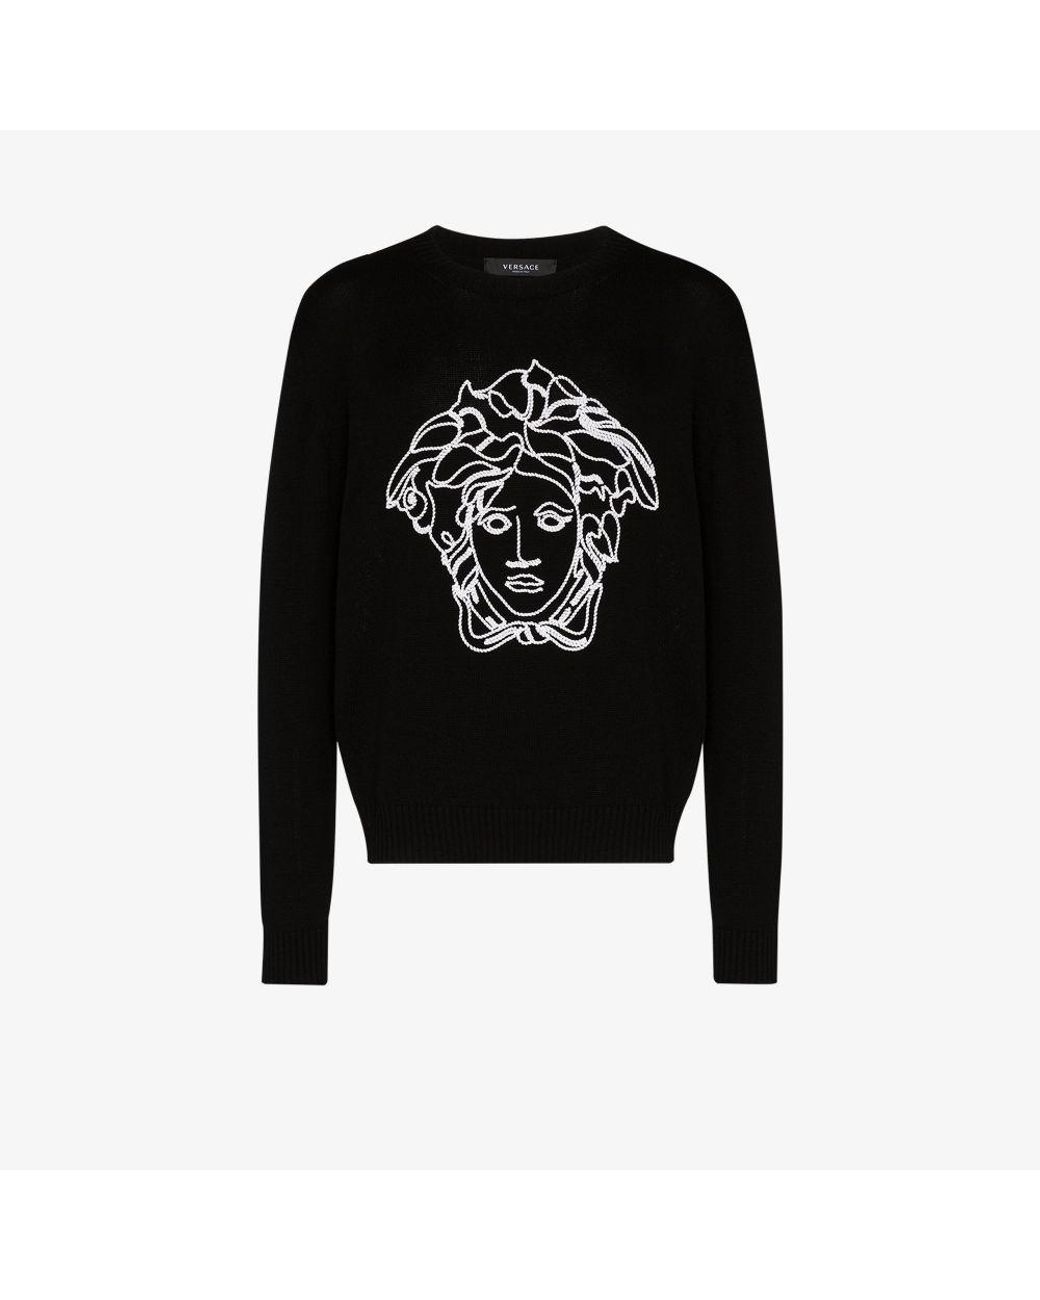 Versace Medusa Logo Wool Sweater in Black for Men - Lyst